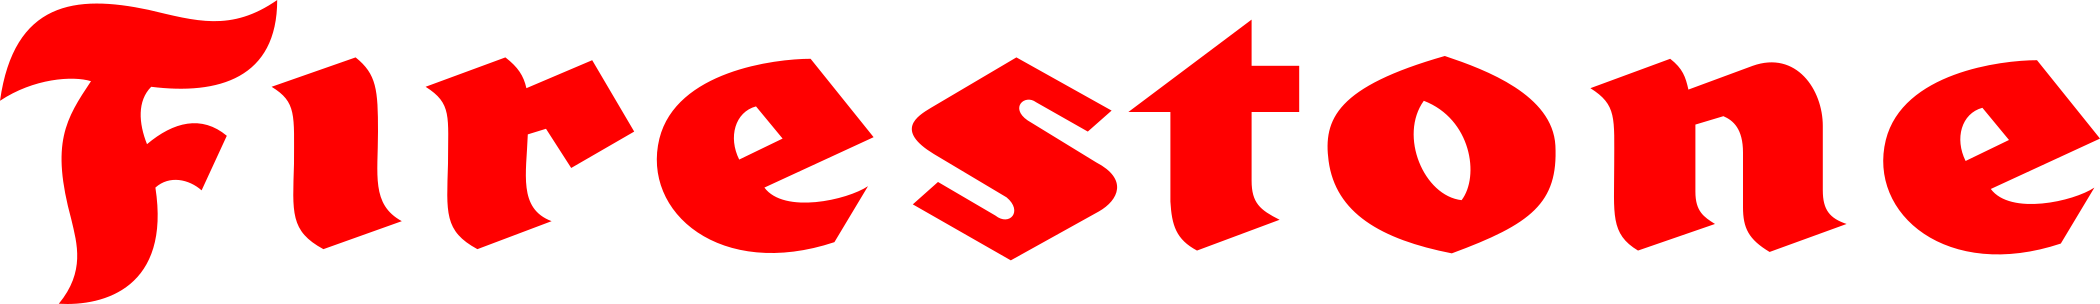 firestone logo 1 - Firestone Logo